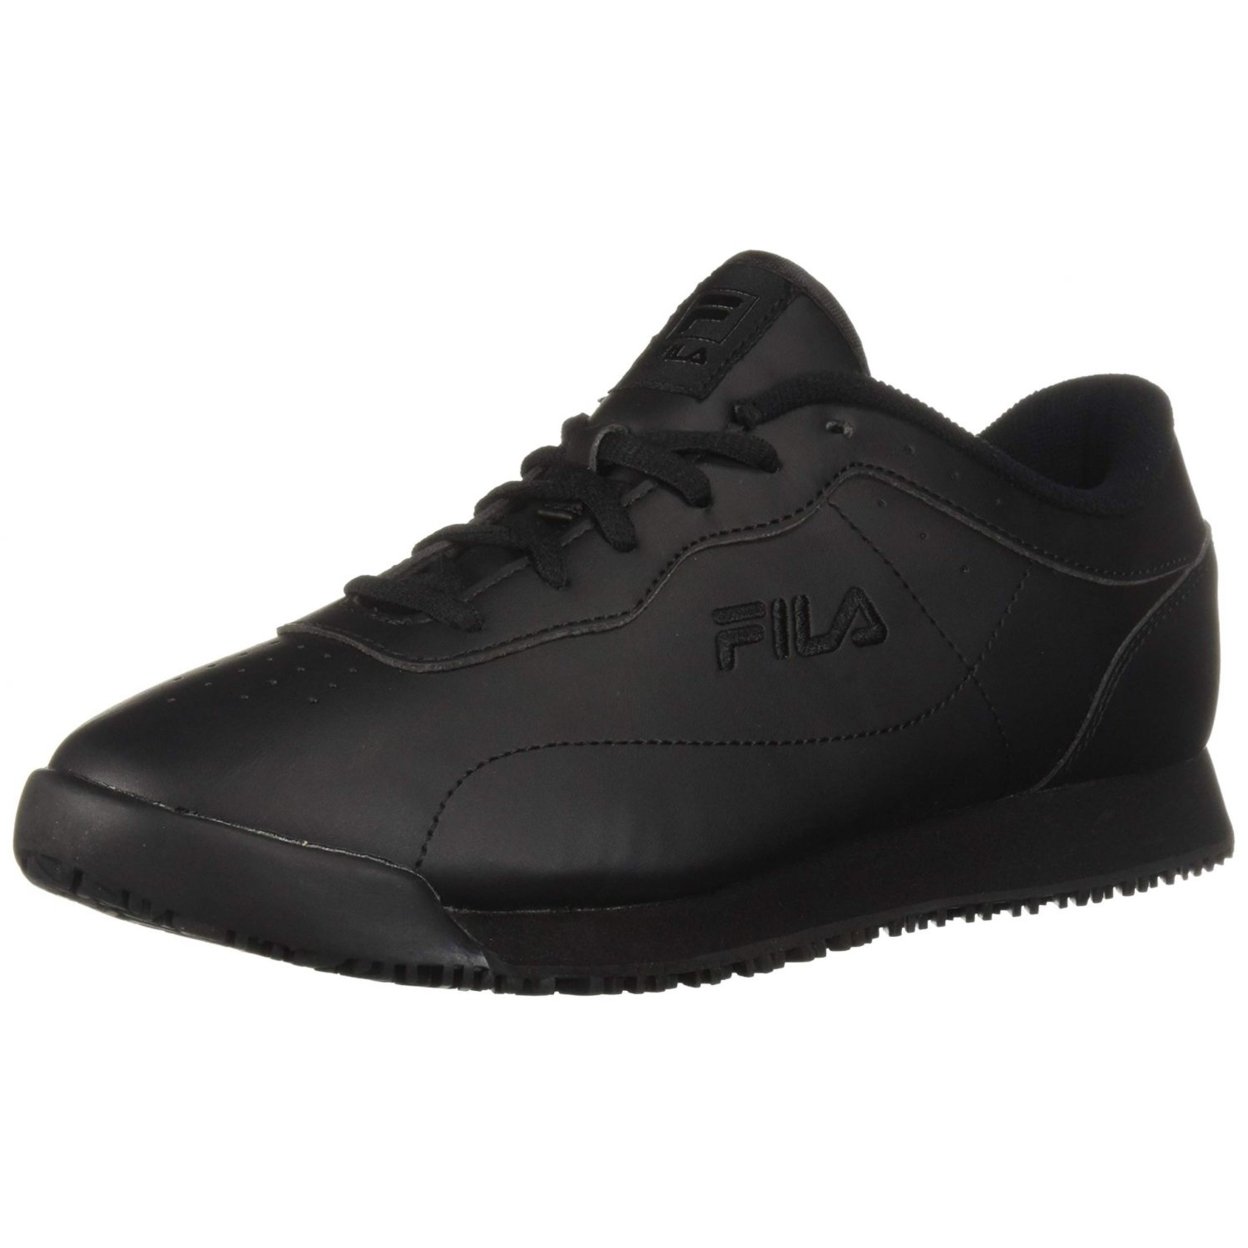 Fila Memory Viable Sr Wide Womens Shoes Size 10, Color: Black 0 BLK/BLK/BLK - BLK/BLK/BLK, 11